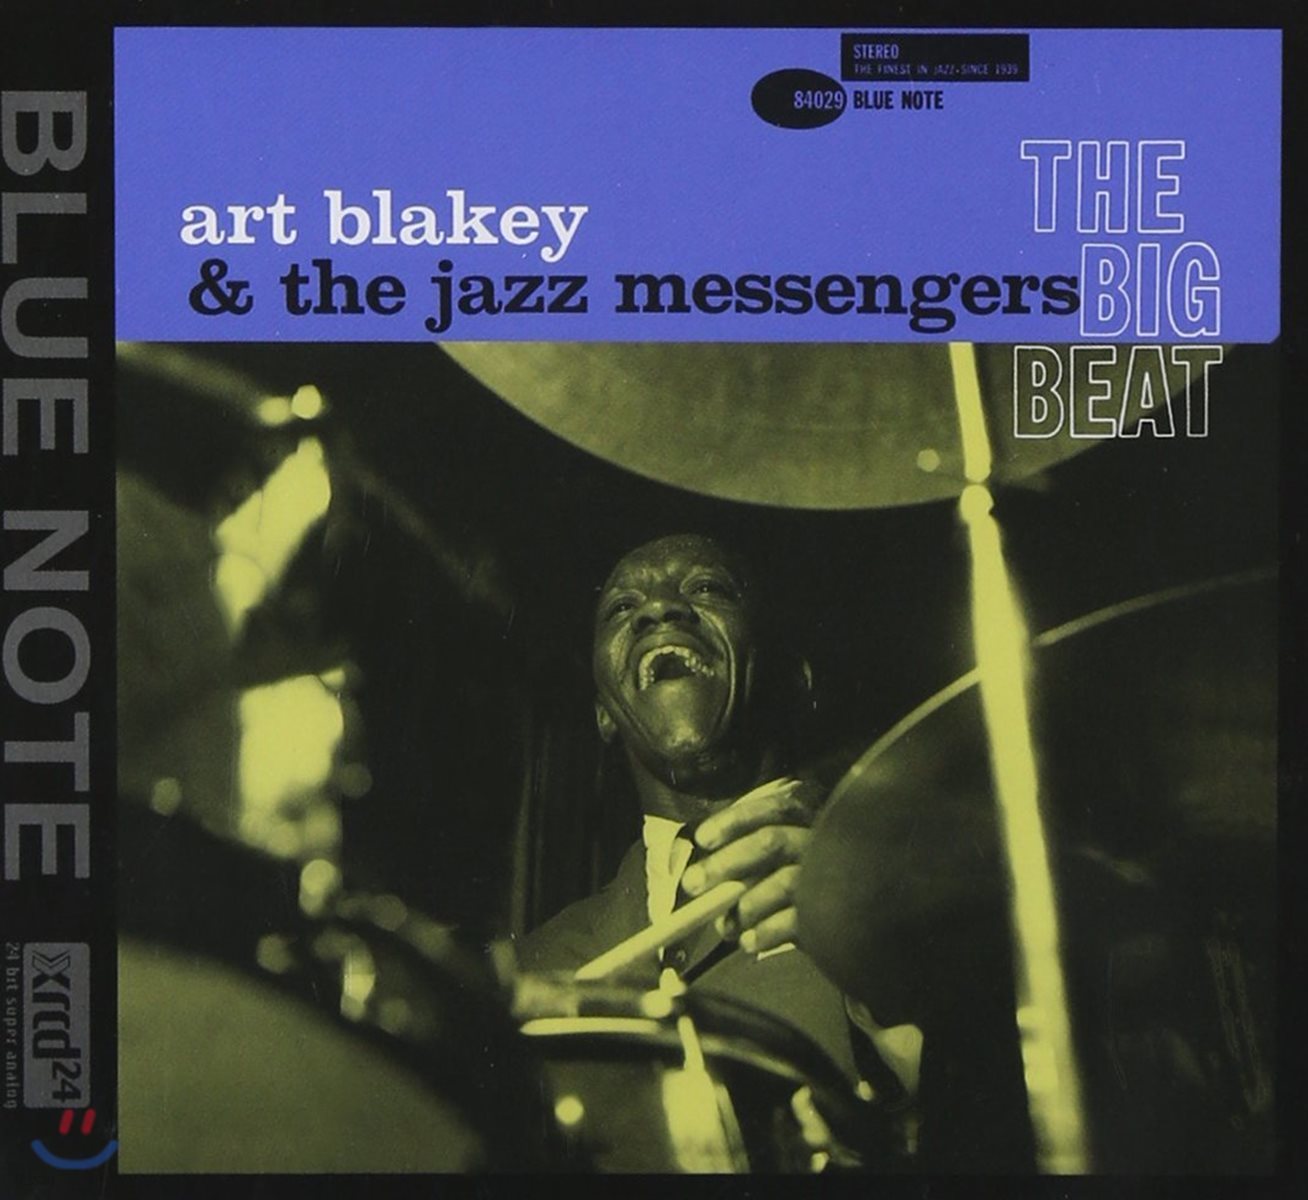 Art Blakey & The Jazz Messengers (아트 블래키 앤 더 재즈 메신저스) - The Big Beat 